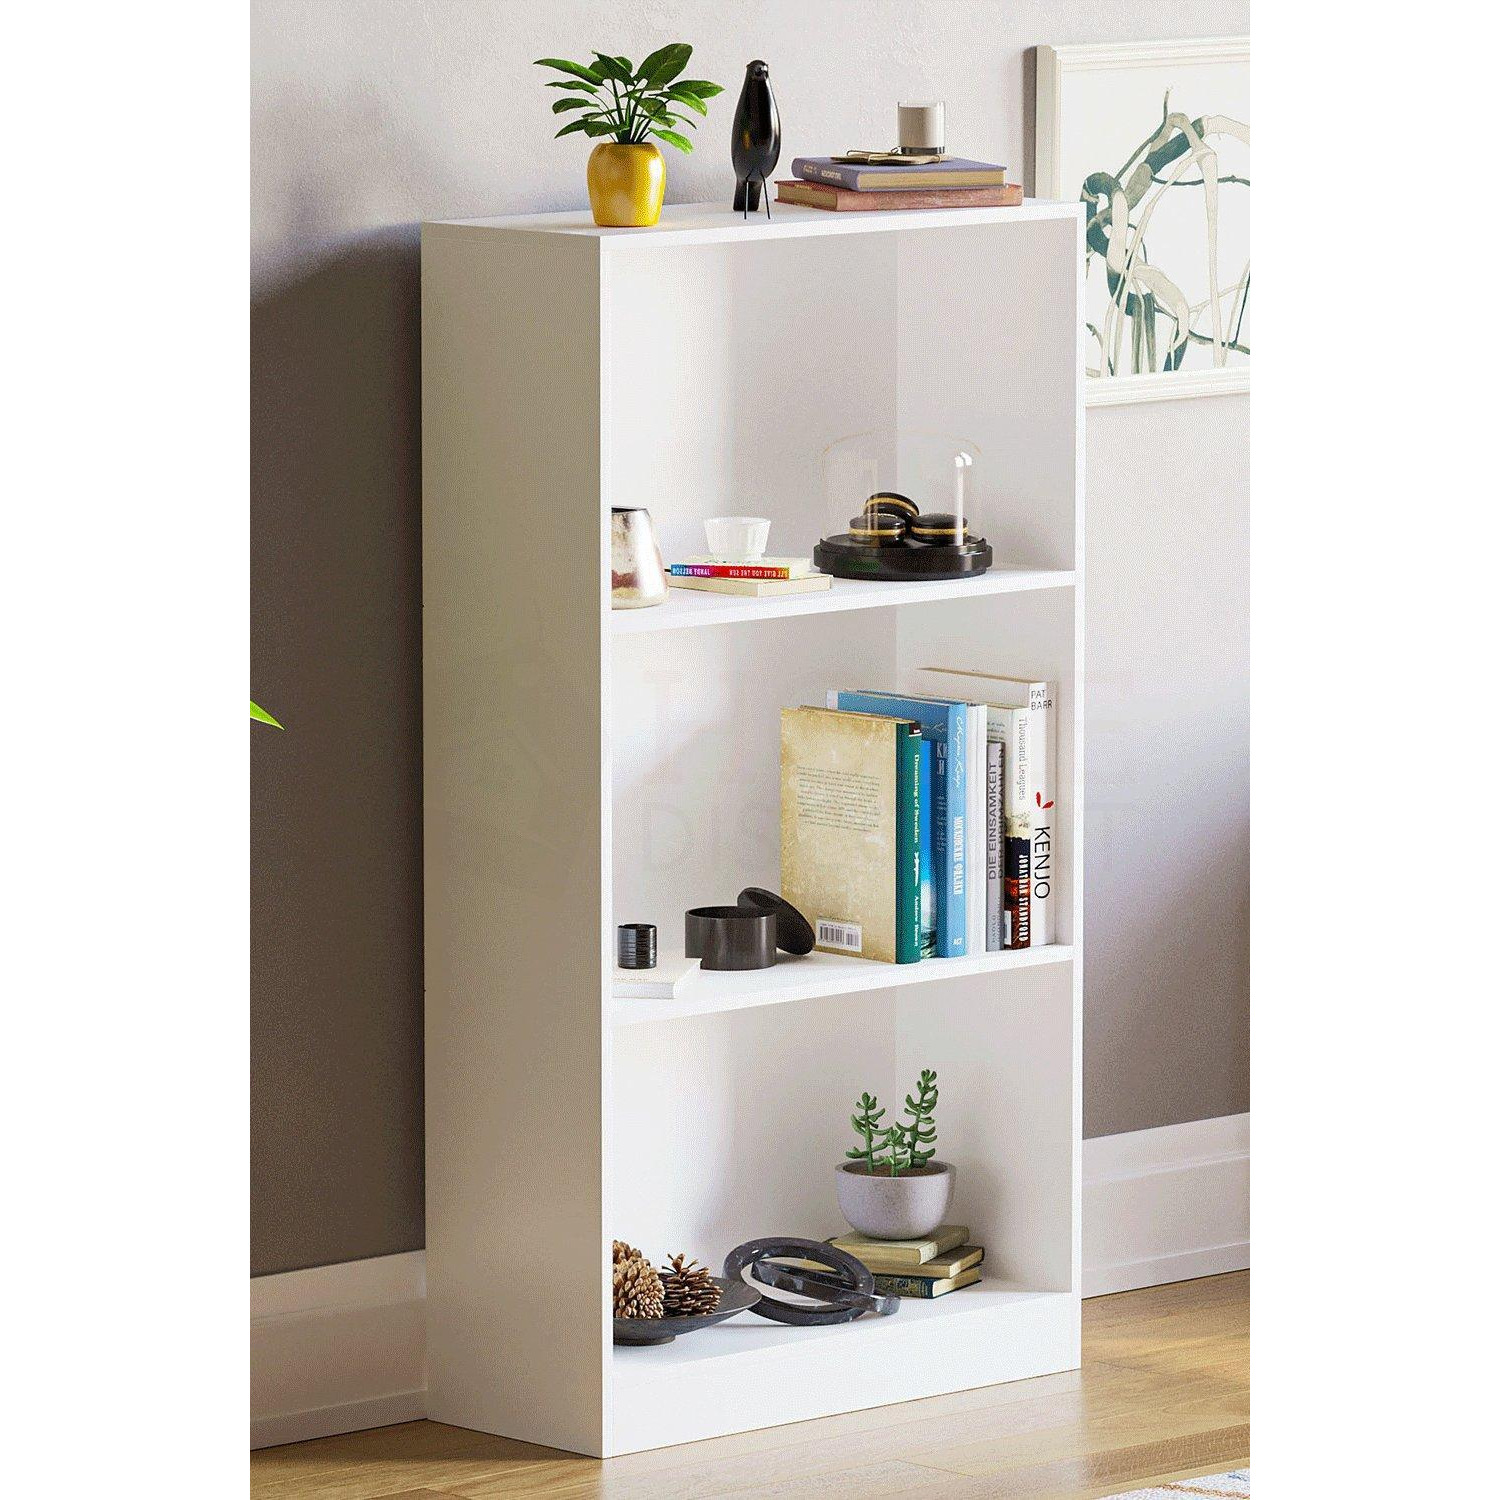 Vida Designs Cambridge 3 Tier Medium Bookcase Storage Unit 1080 x 600 x 240 mm - image 1